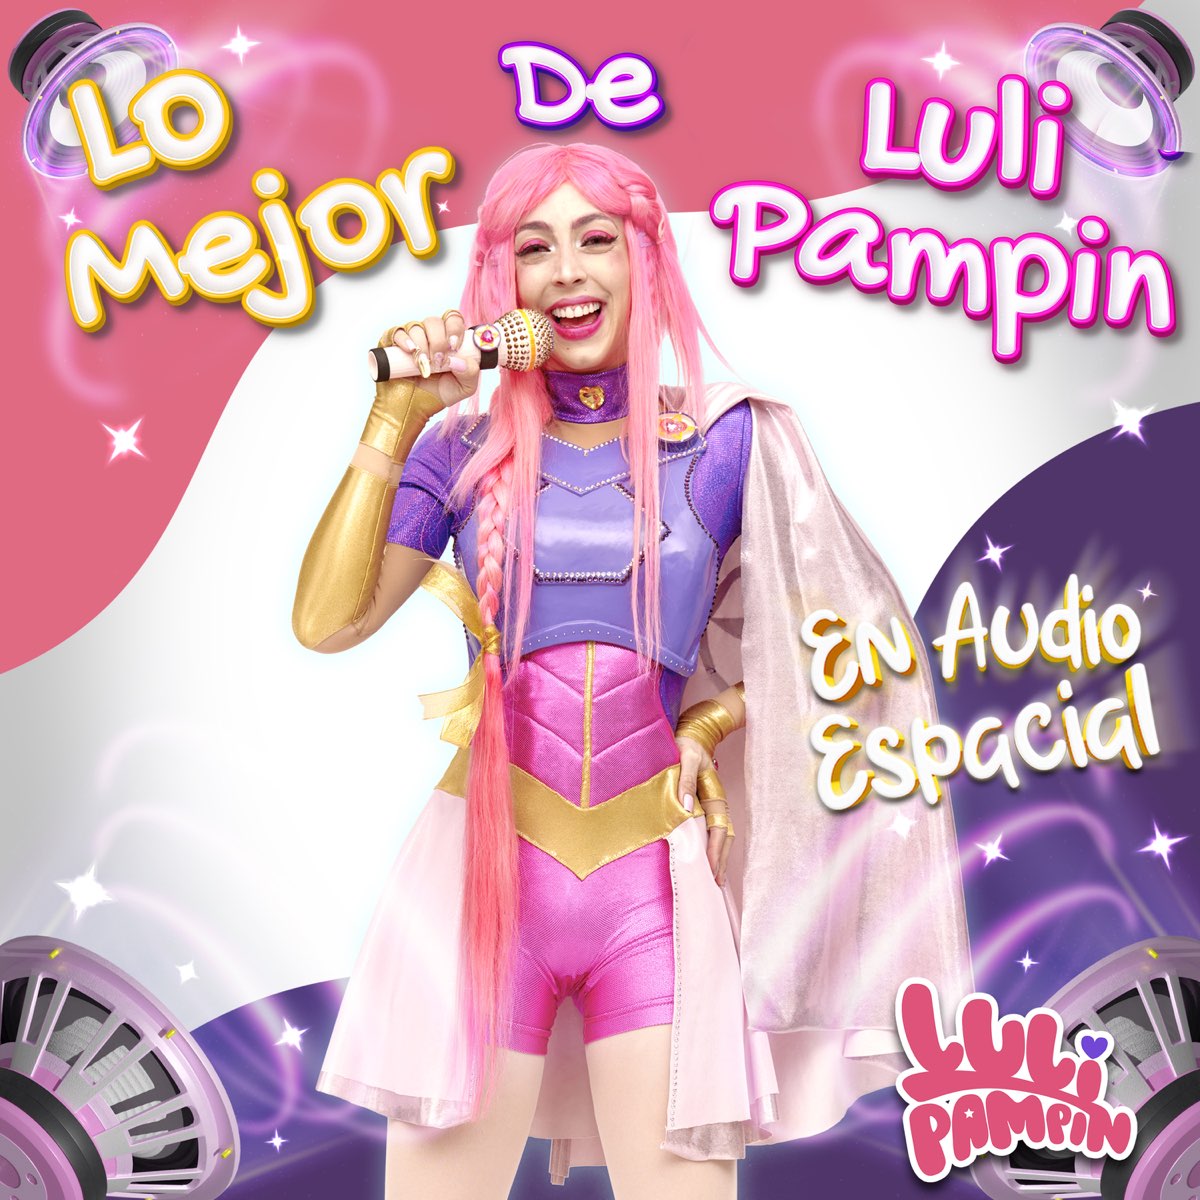 ‎Lo Mejor de Luli Pampín (En Audio Espacial) by Luli Pampín on Apple Music